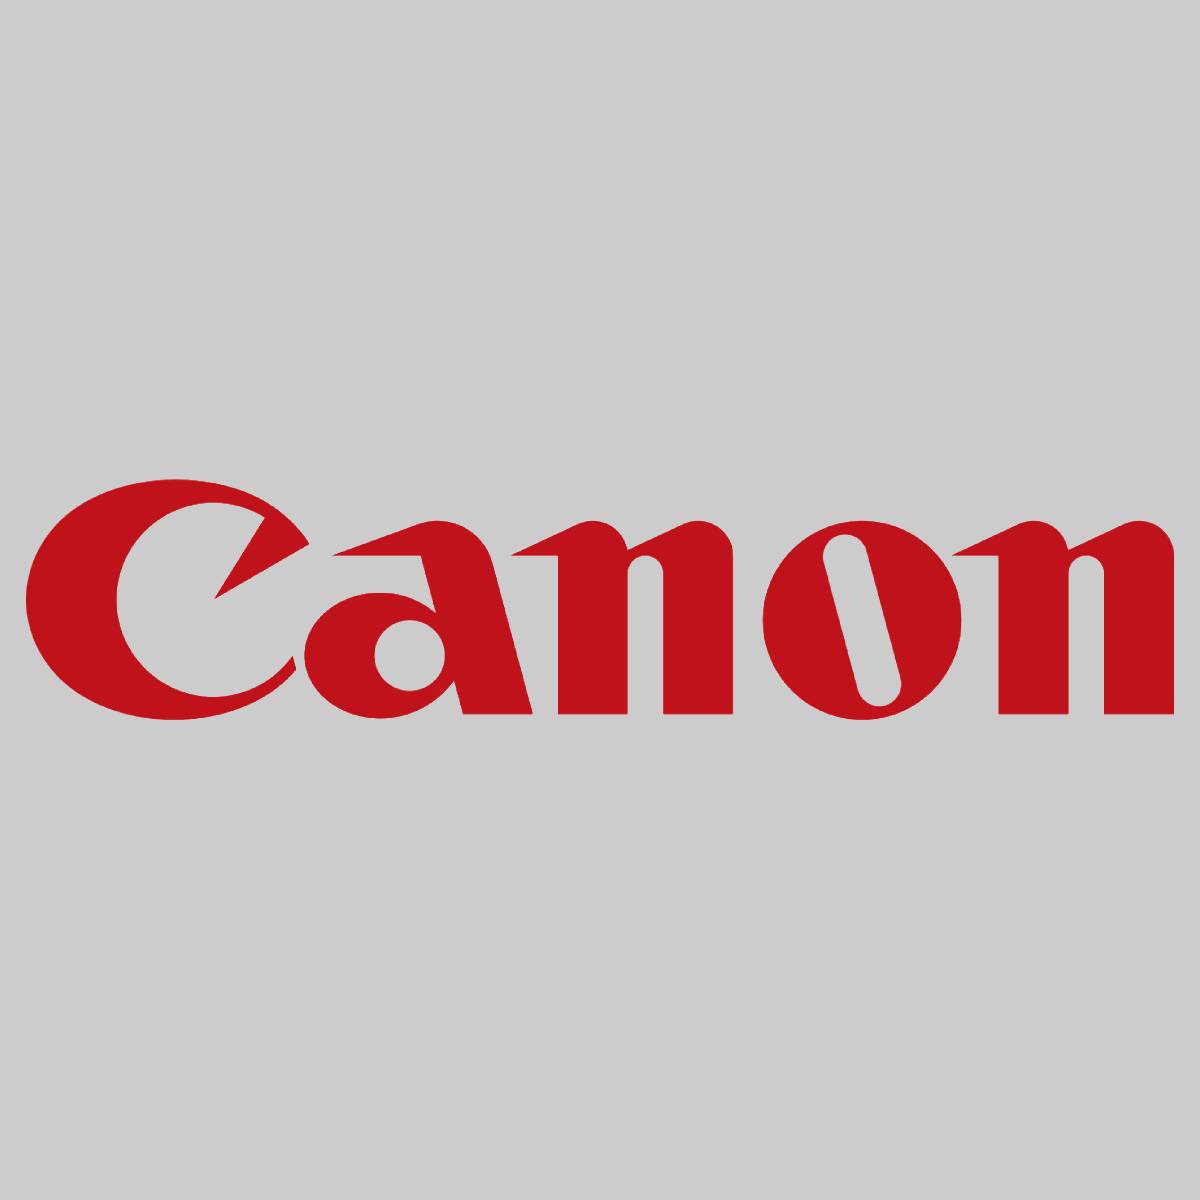 "Original Canon Developer Assy Yellow FM0-2706-000 imageRUNNER C 7260 7270 9270